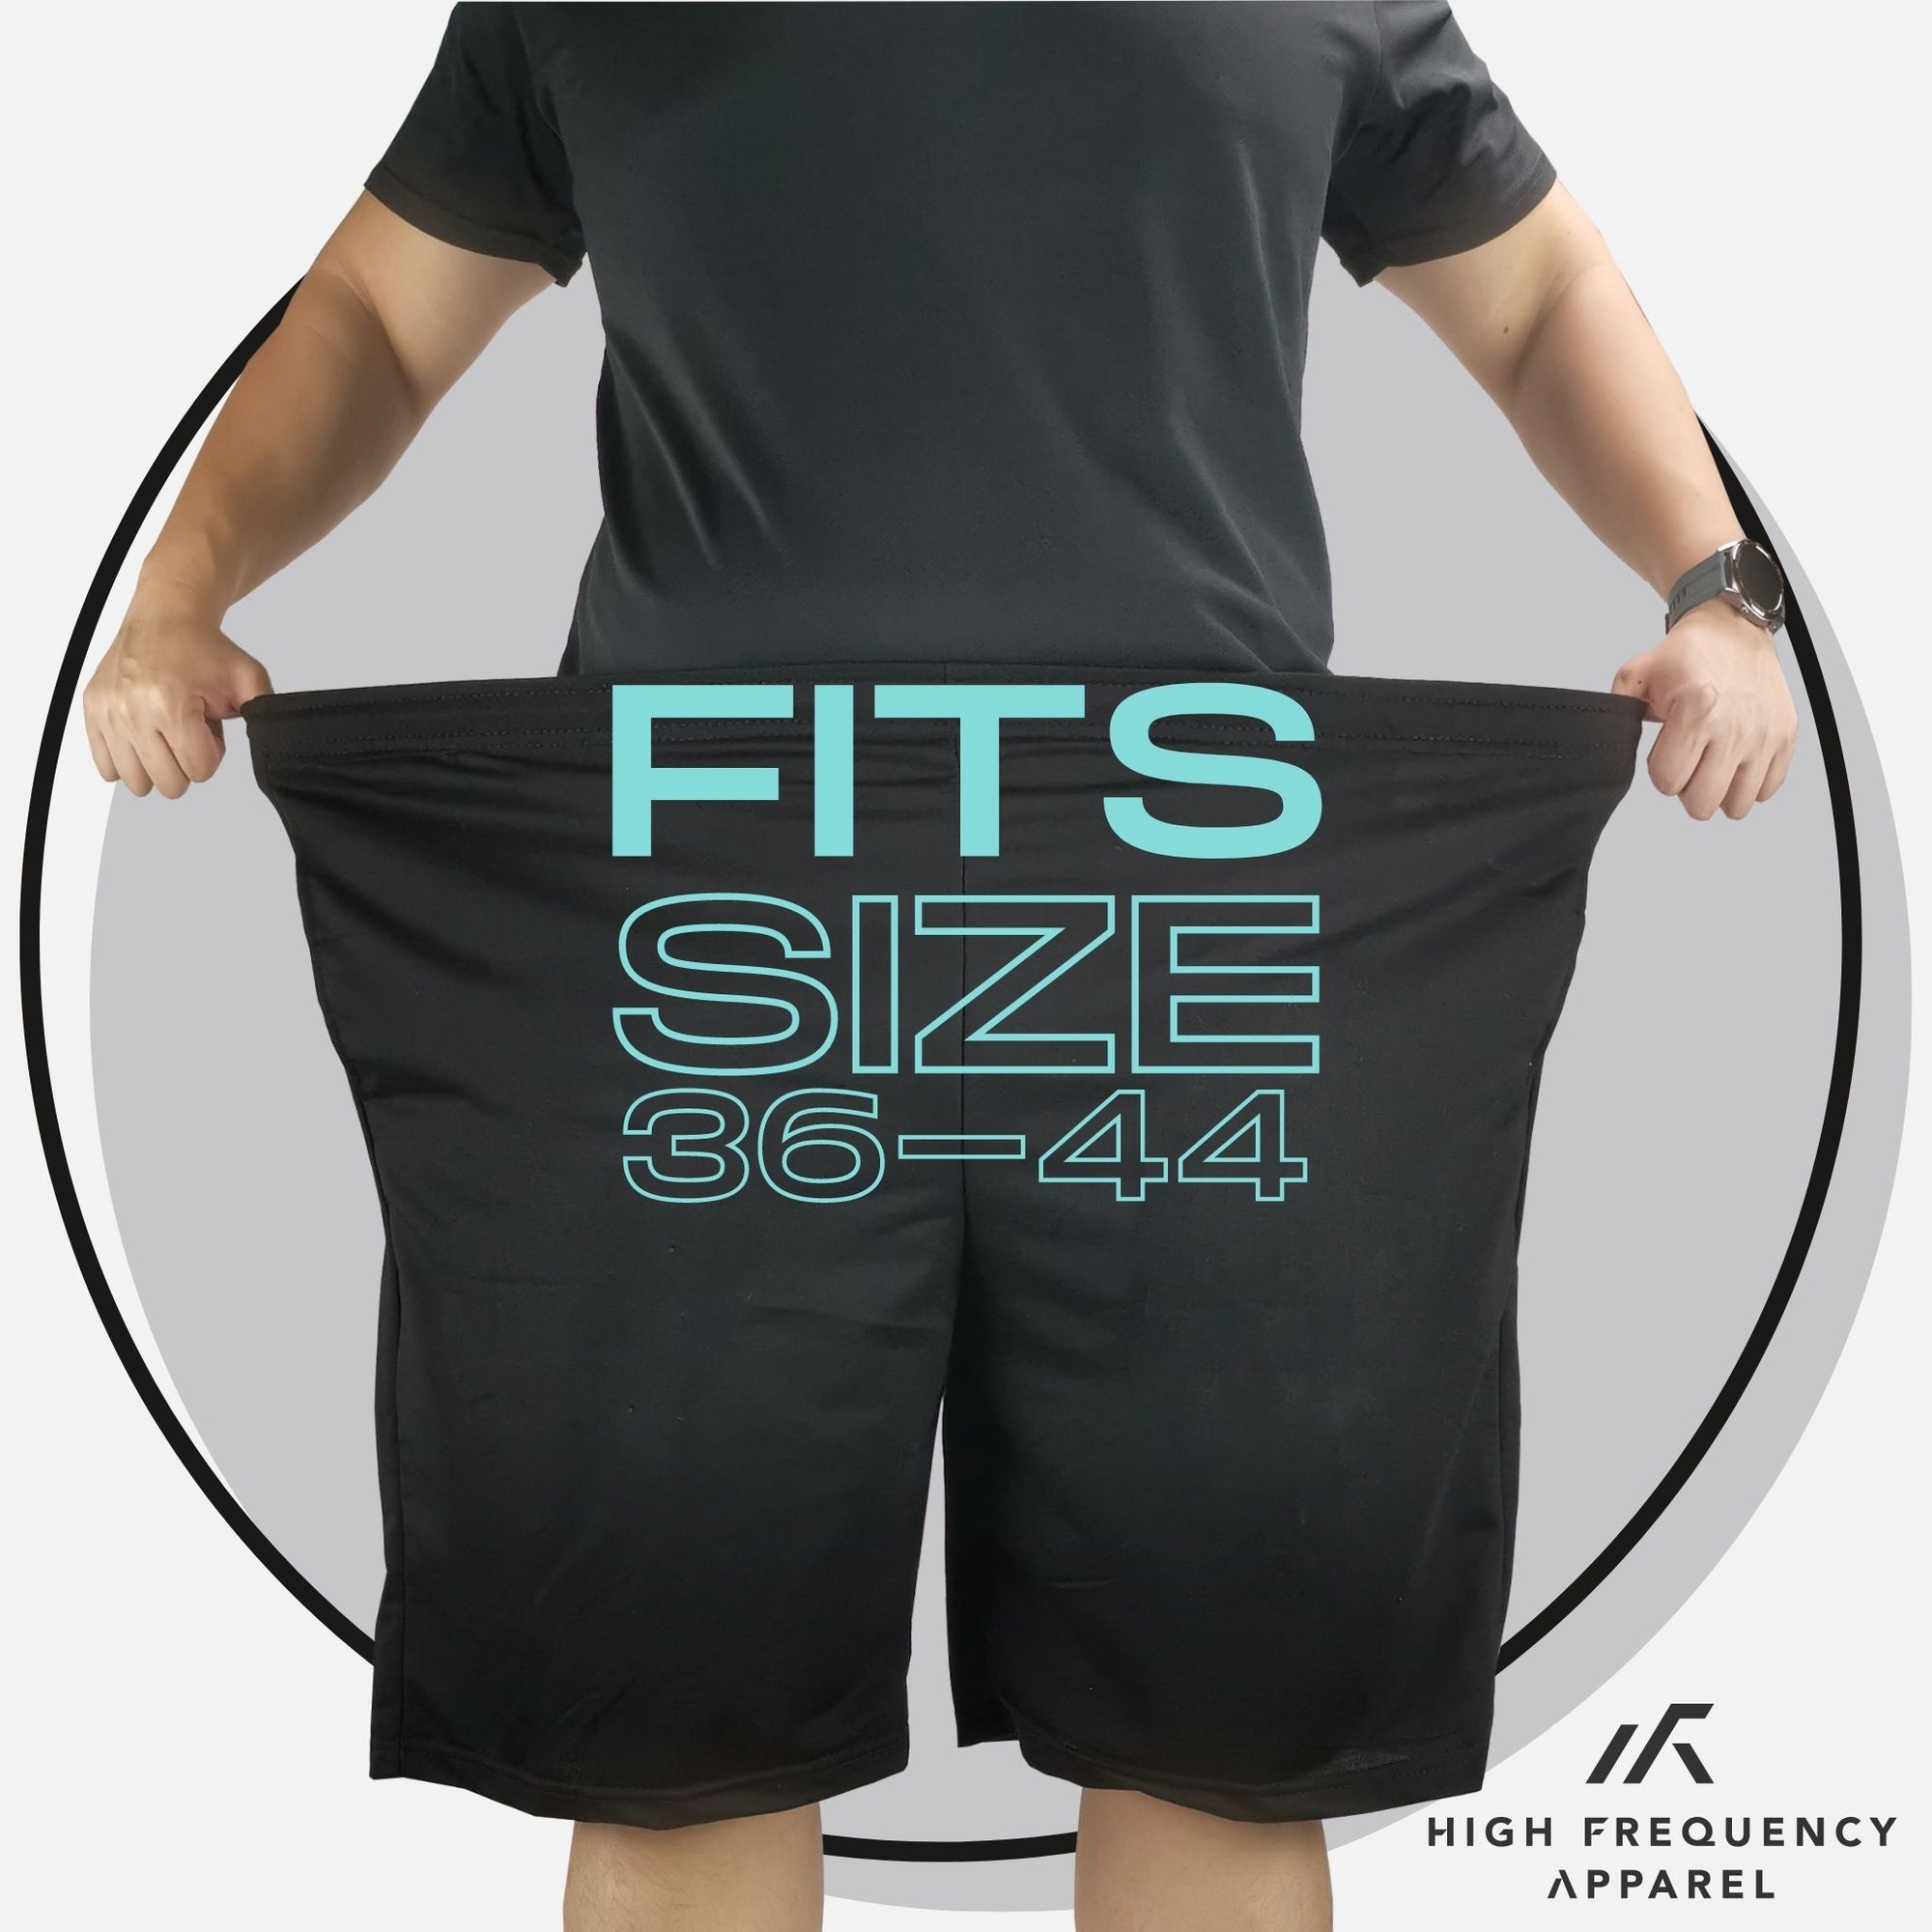 [BUNDLE OF 3] PLUS Size Plain Unisex Ultra Lightweight Shorts